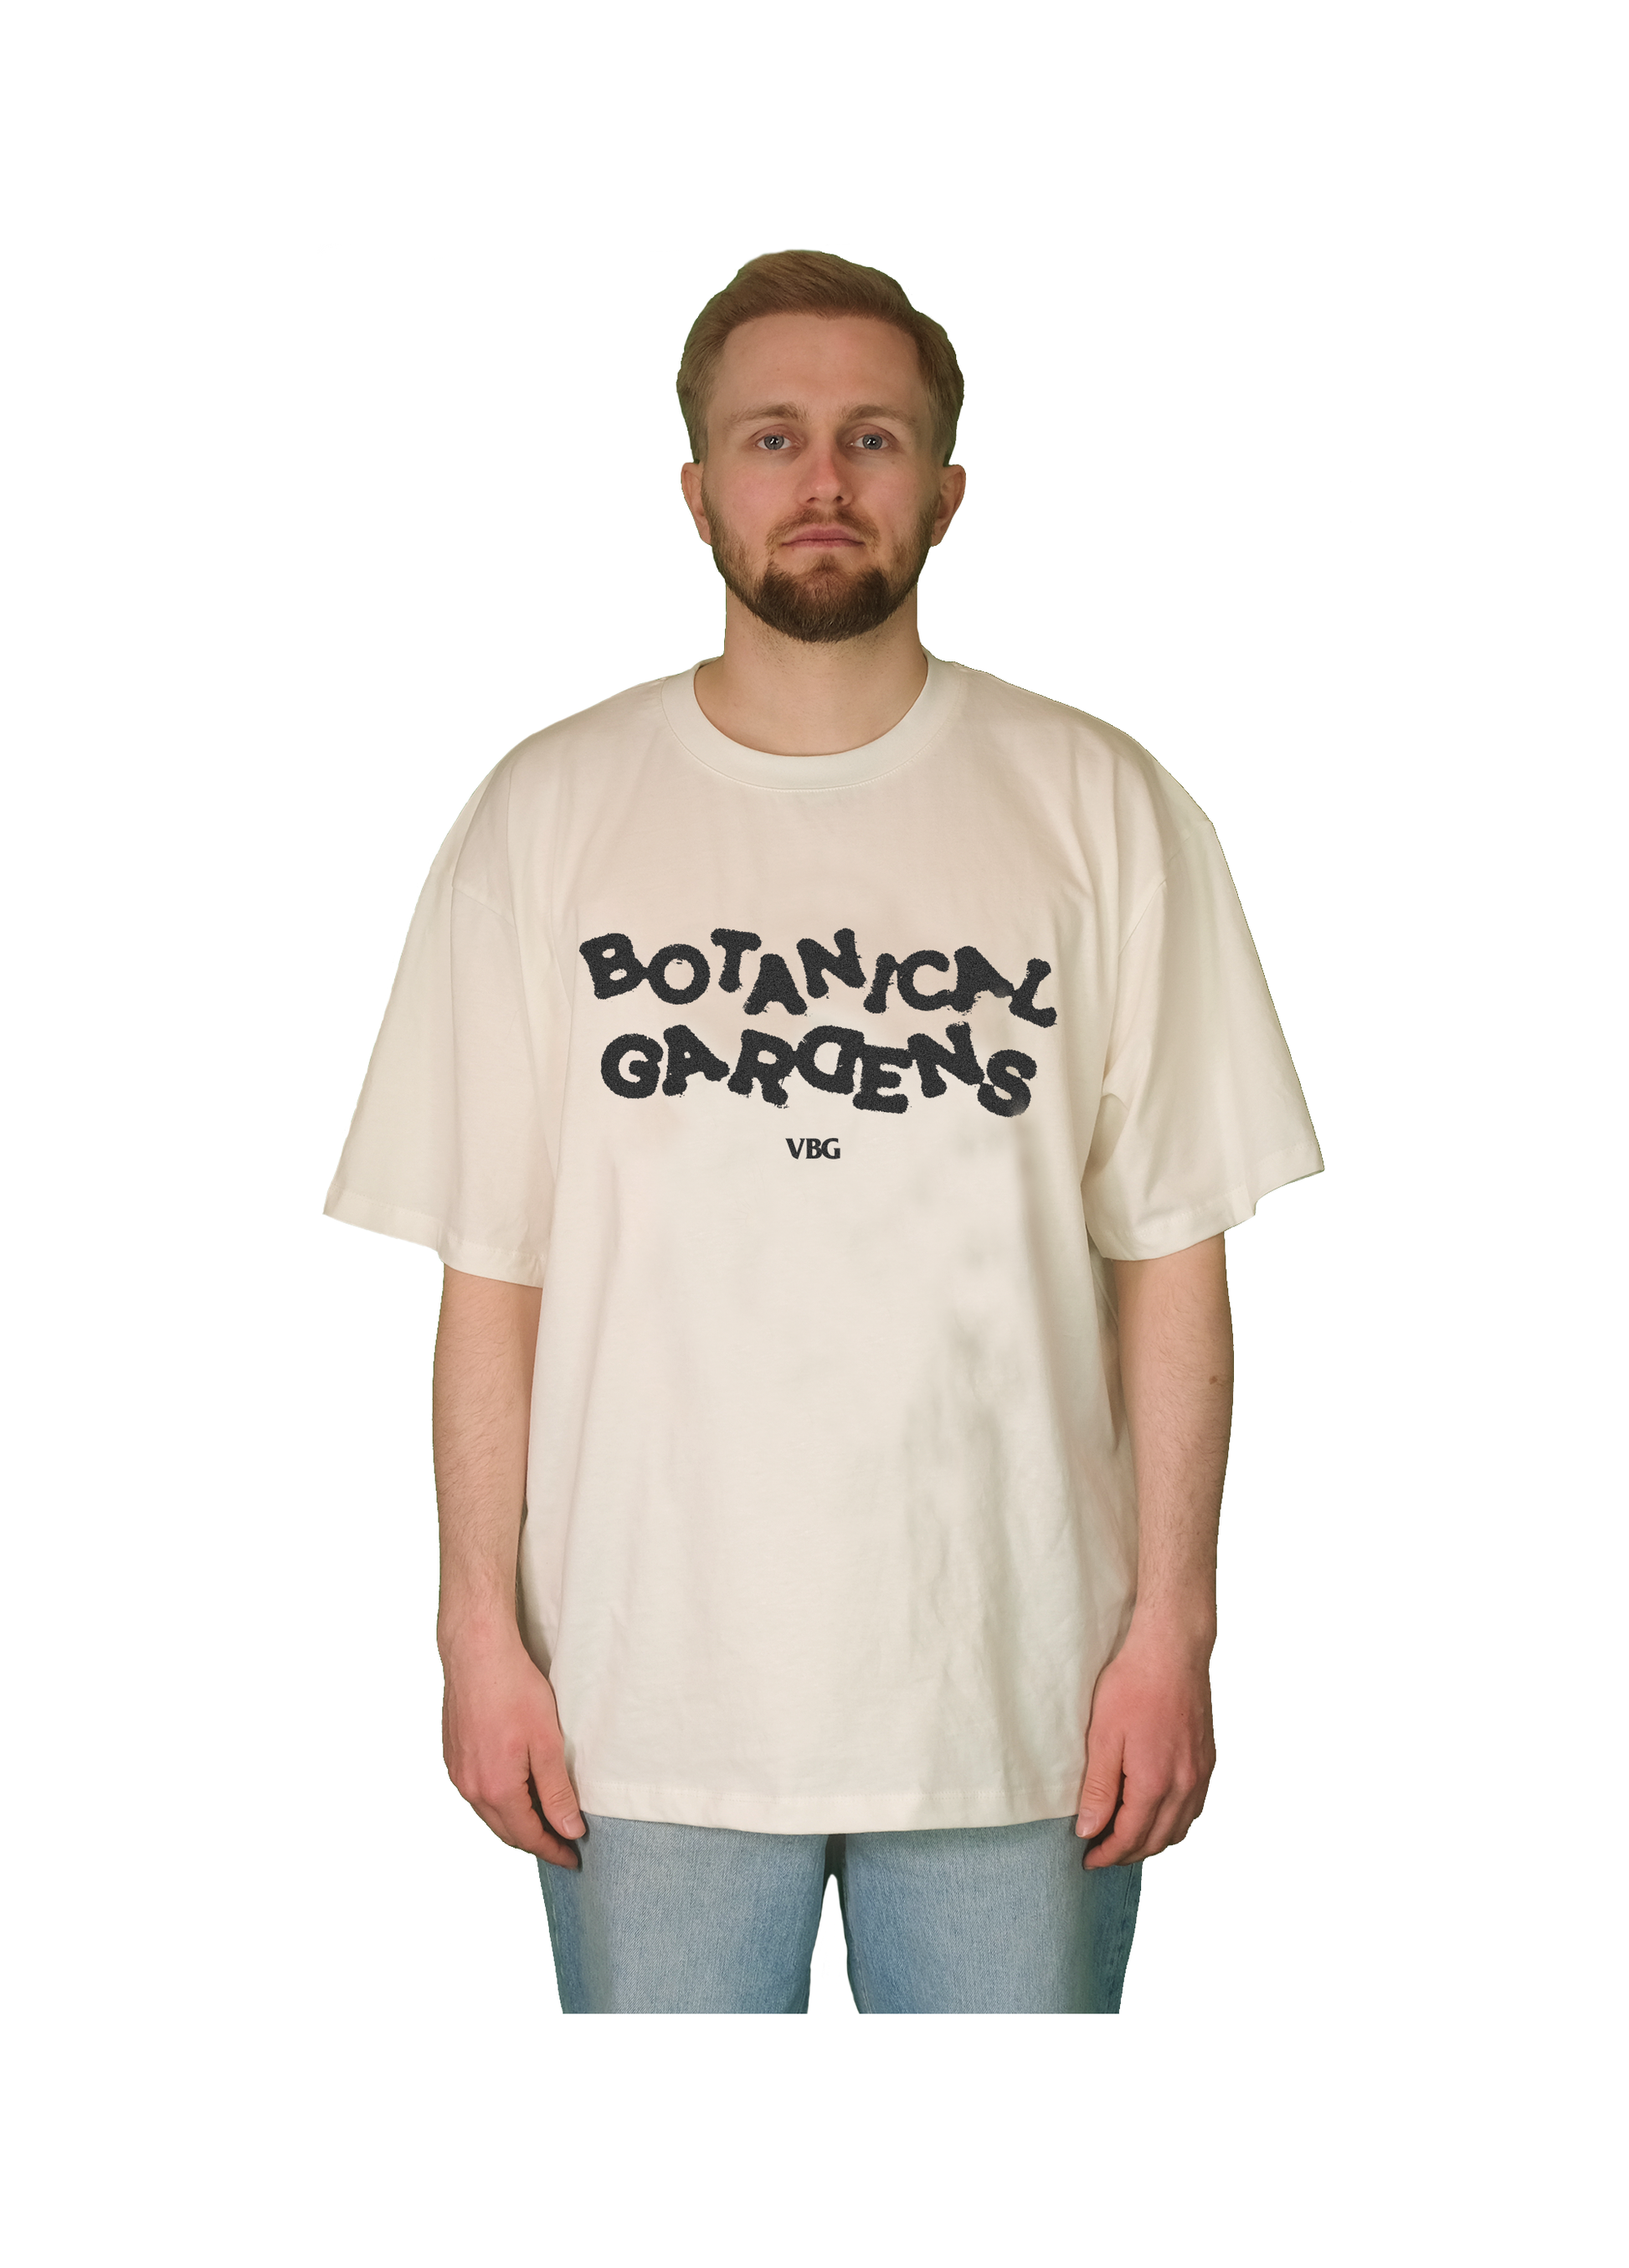 „Botanical Gardens“ T-Shirt - Cream/Black - VBG